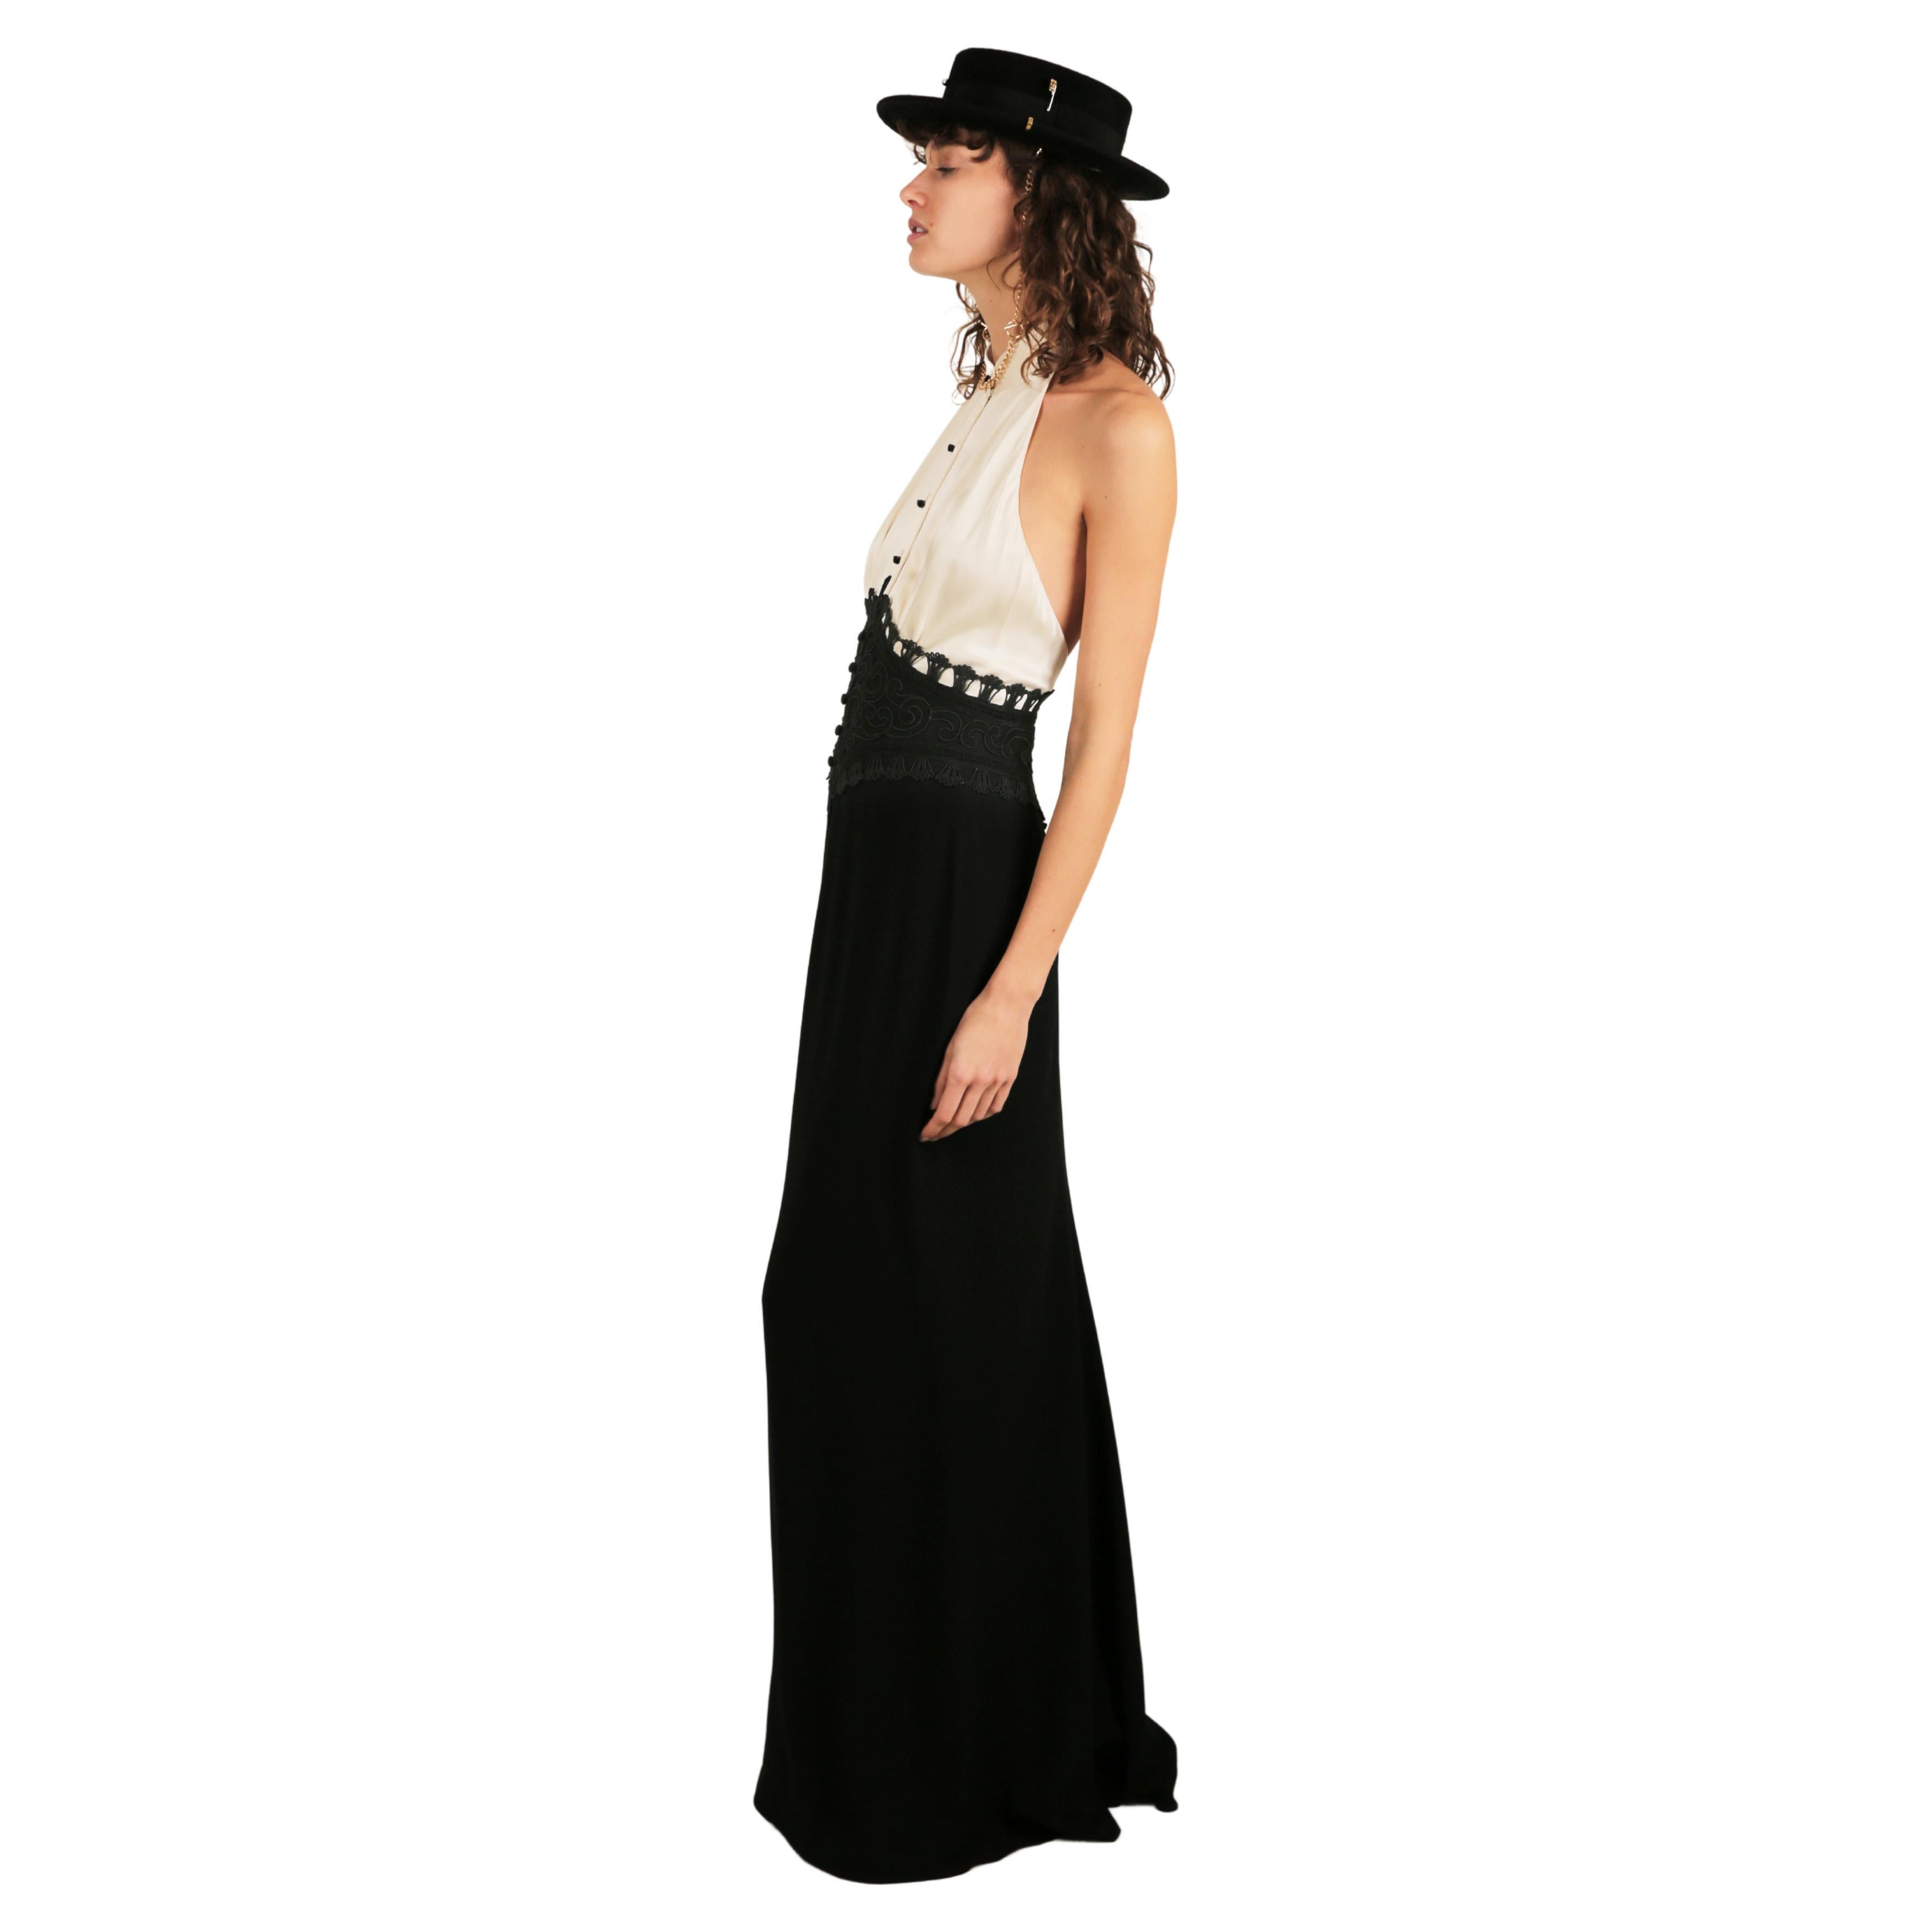 Ralph Lauren SS 2013 black white sleeveless halter backless button up dress gown For Sale